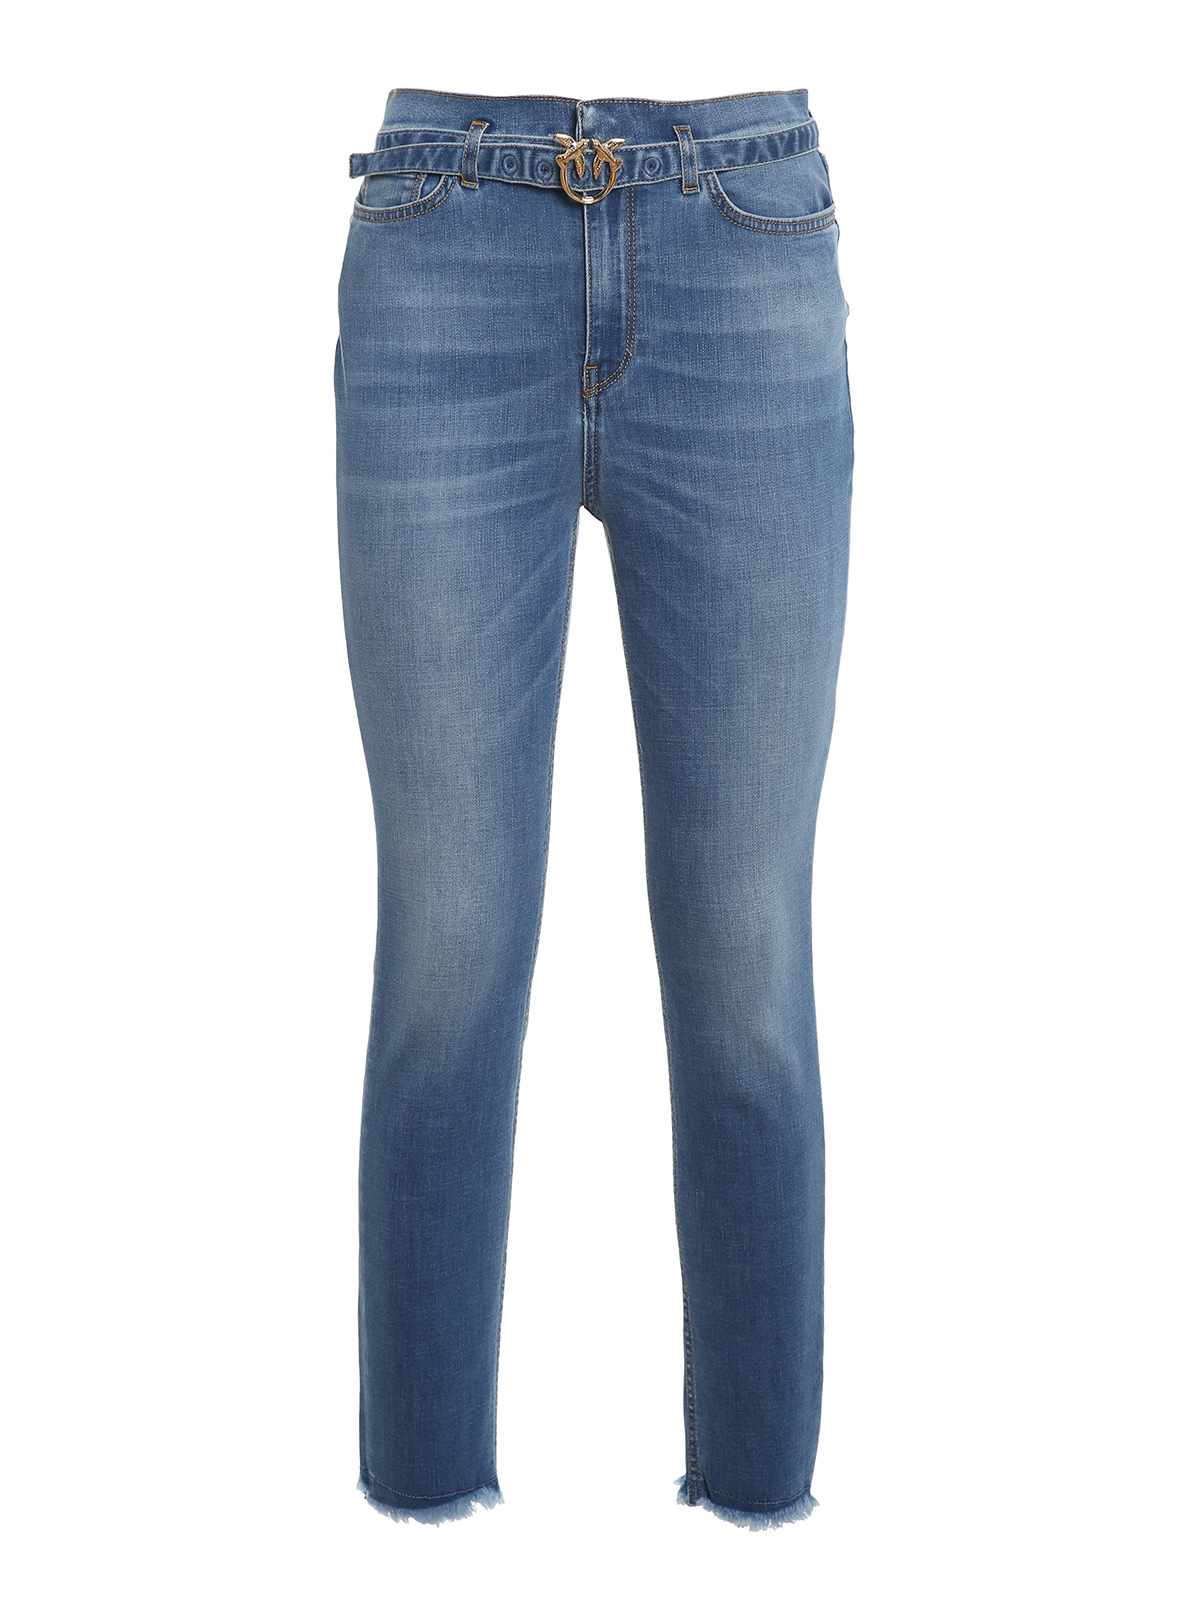 Skinny jeans Pinko - Susan jeans - 1J10KMY6KWF57 | Shop online at iKRIX